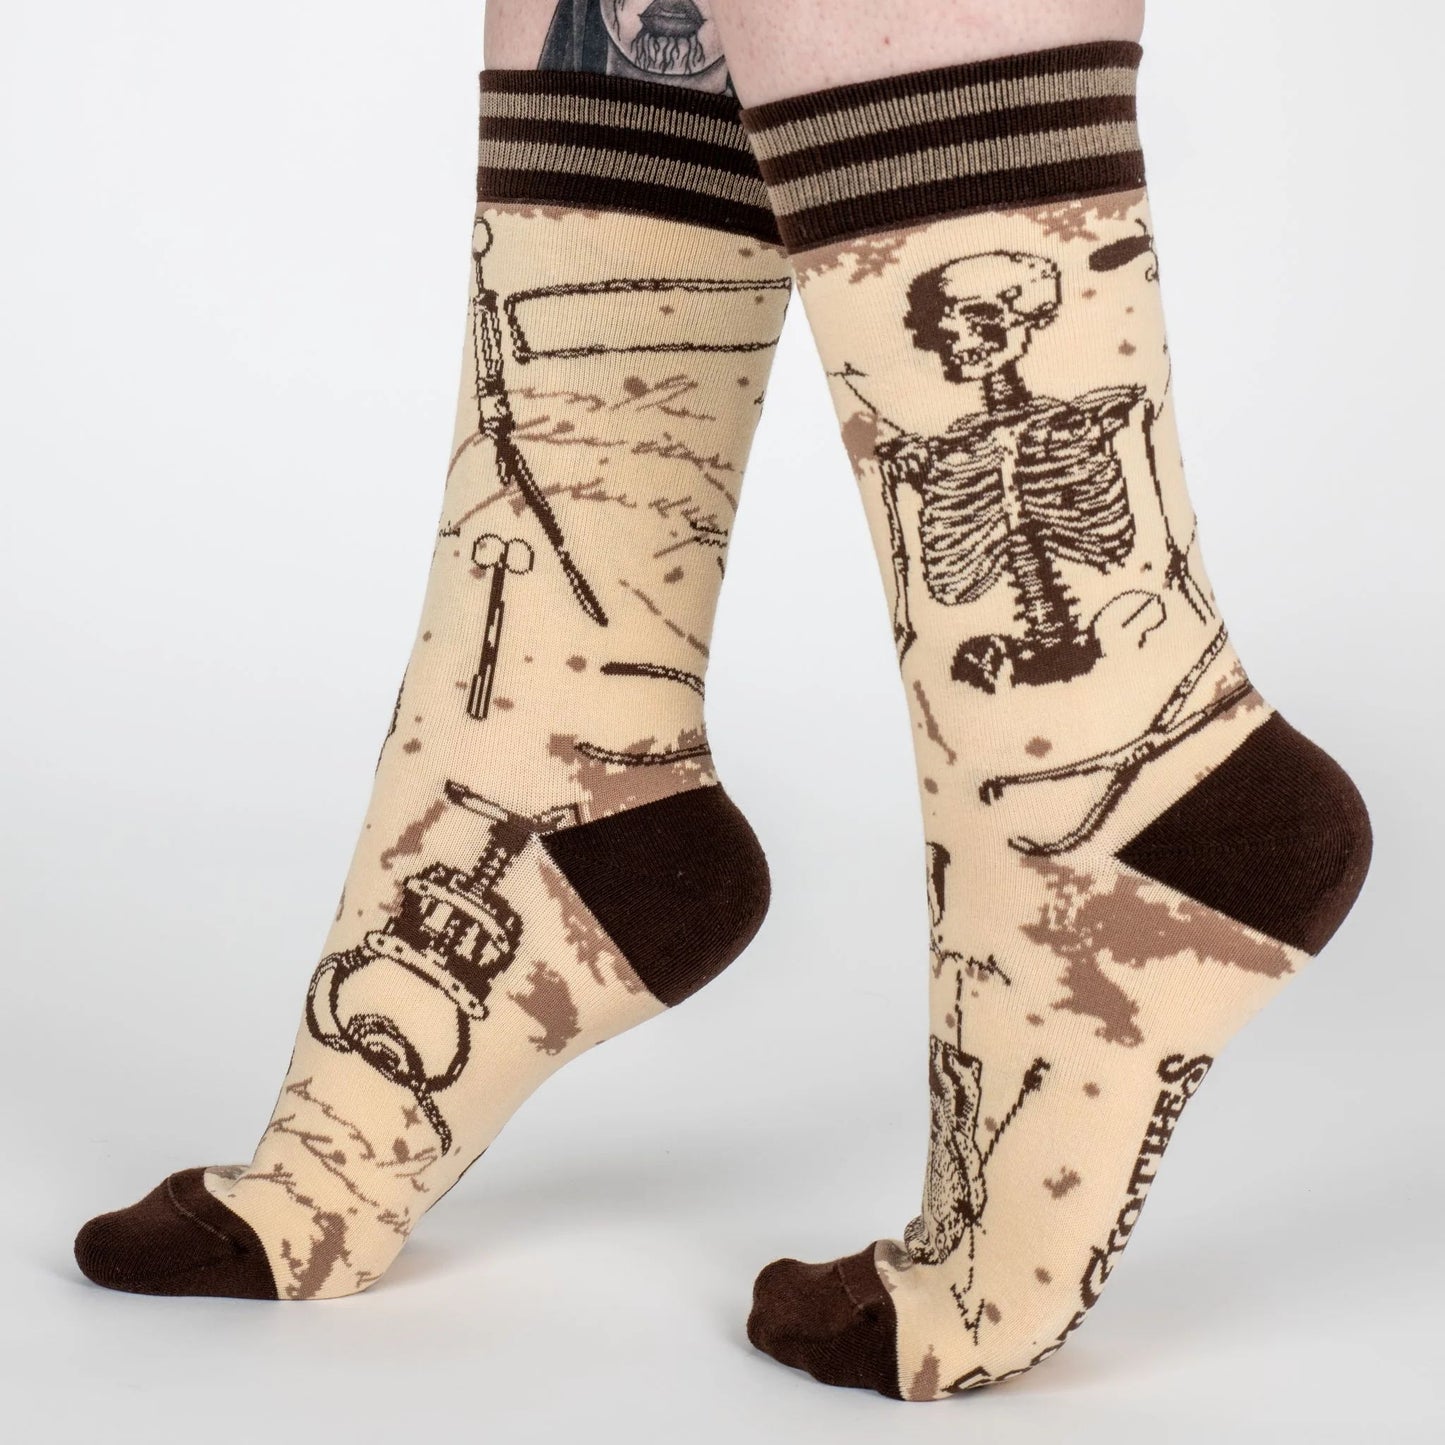 Antique Medical Crew Socks | Vintage Medical Tools Theme Design